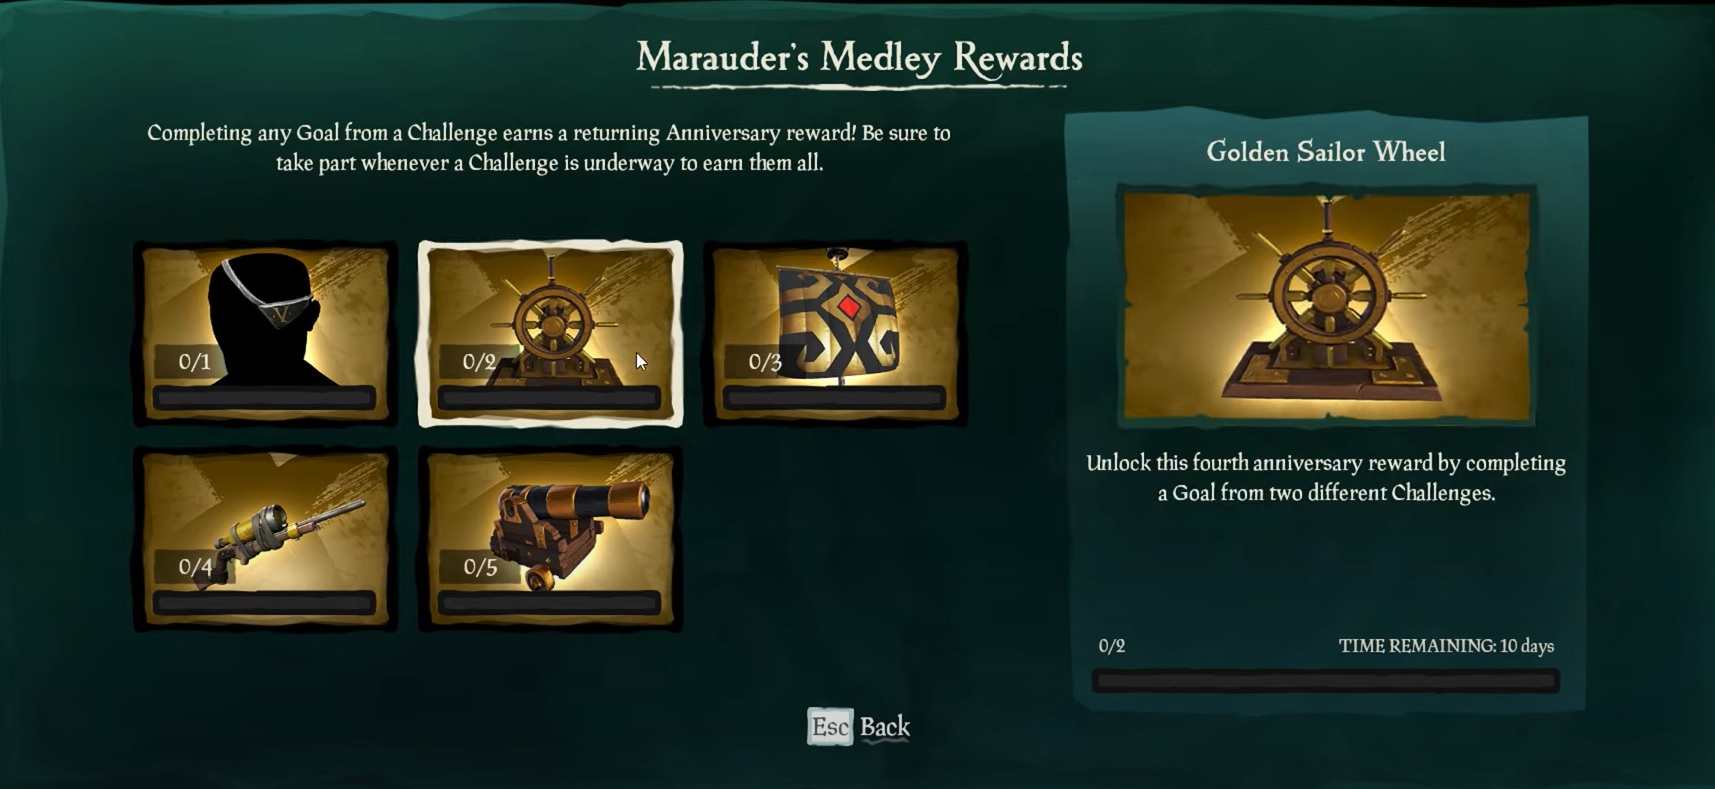 Sea of Thieves Marauder's Medley Rewards